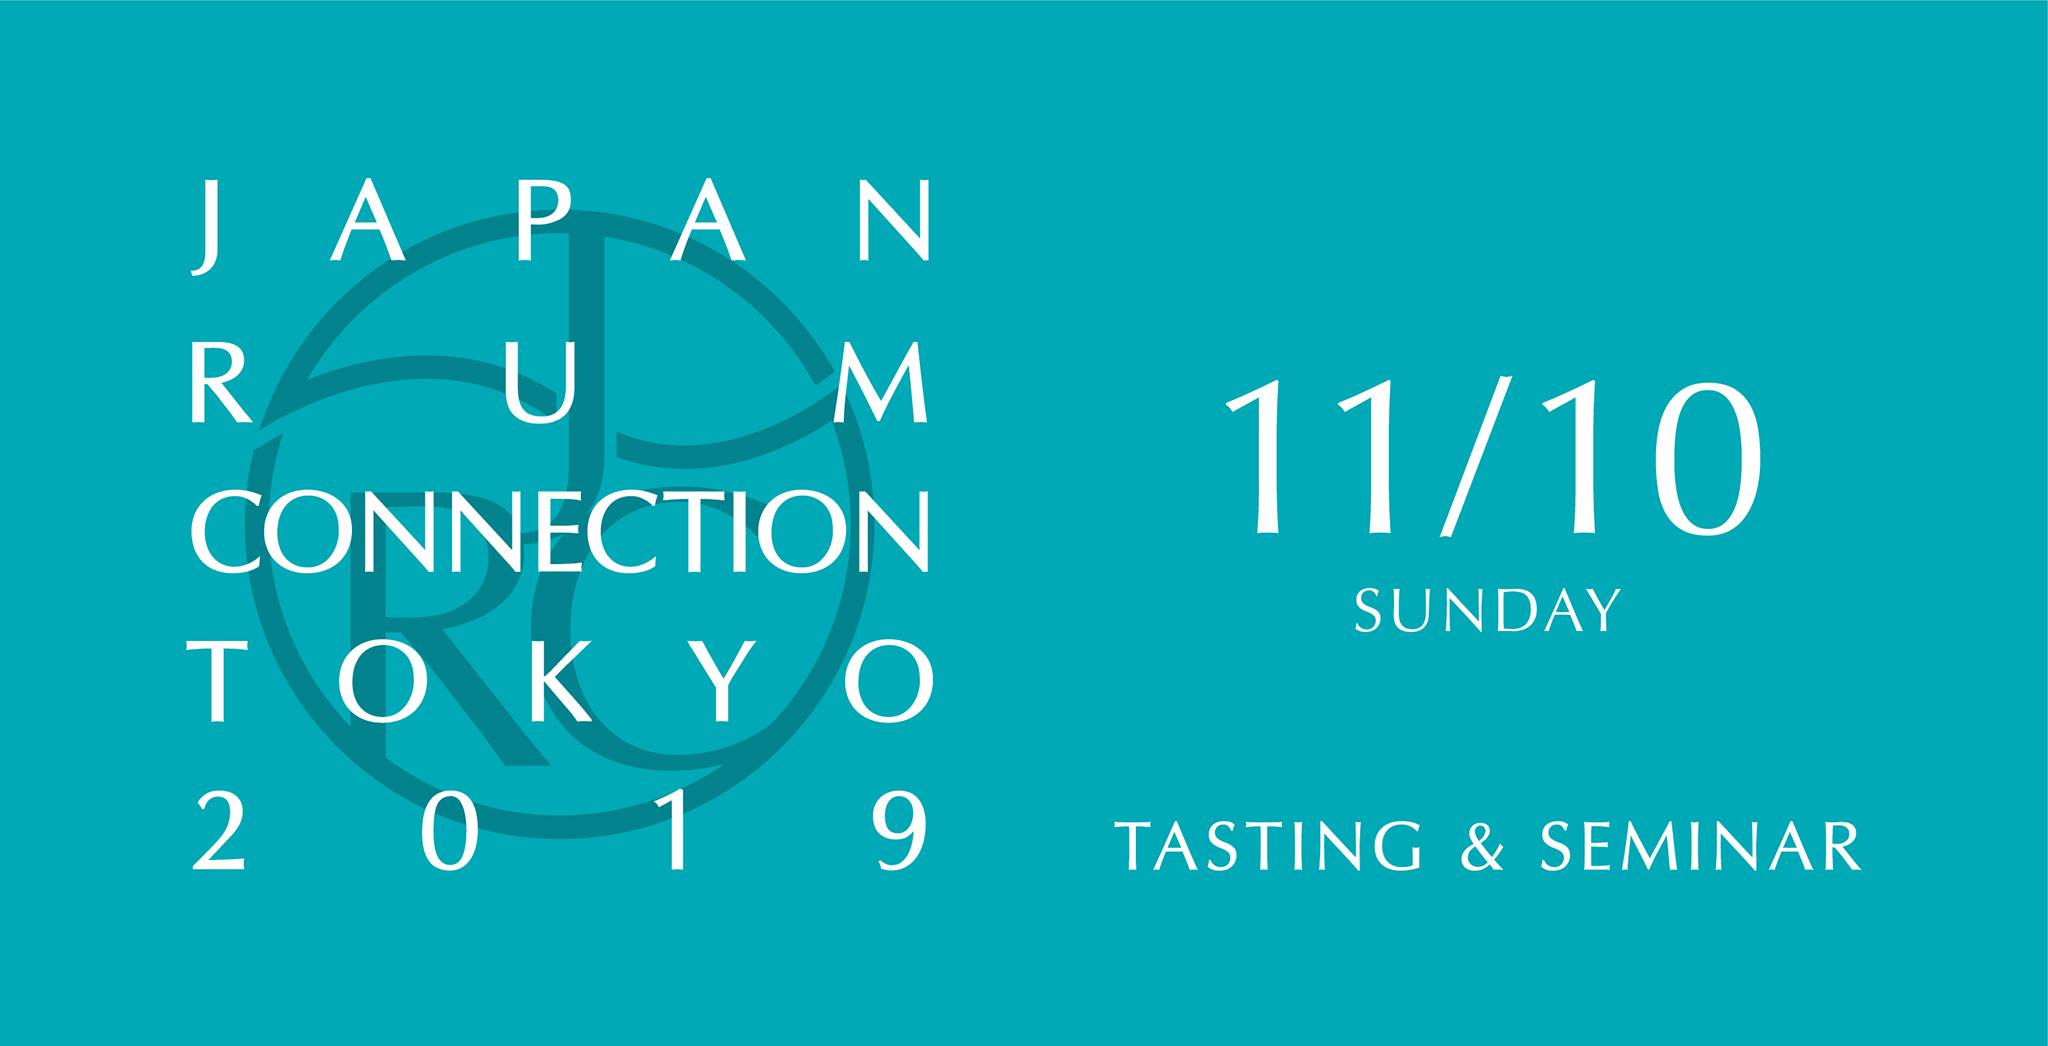 JAPAN RUM CONNECTION TOKYO 2019 TASTING & SEMINAR